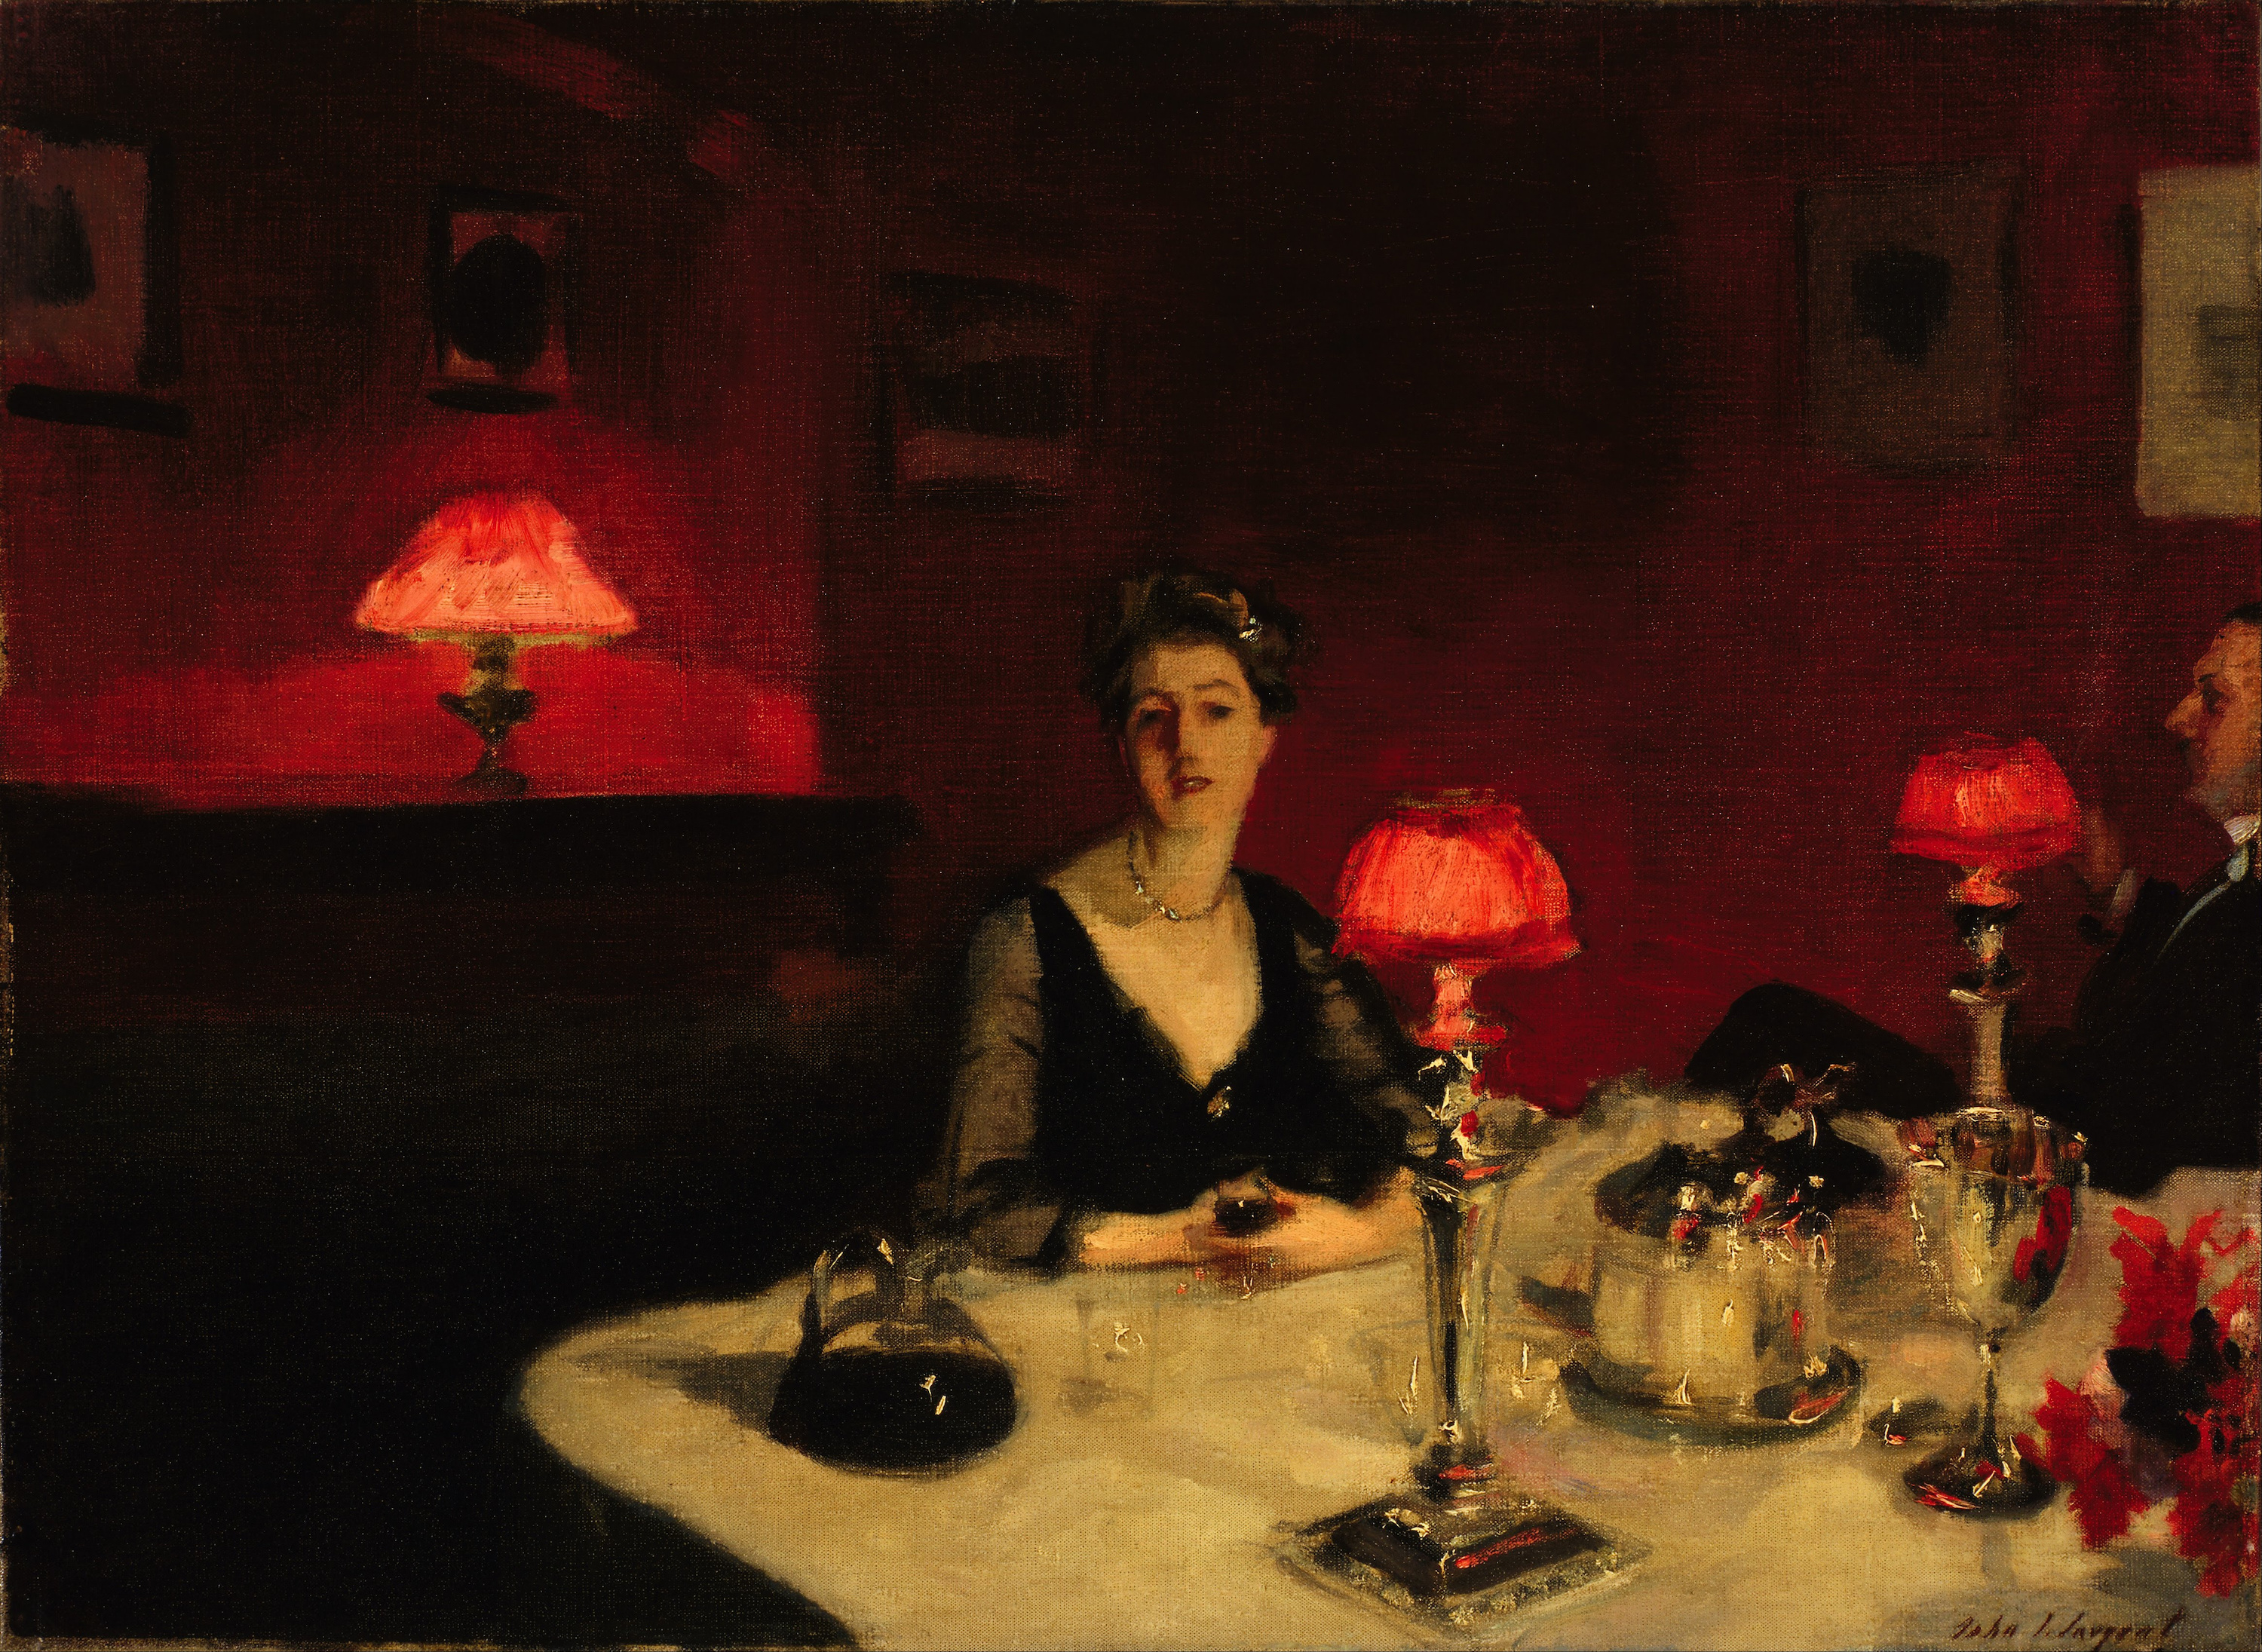 Le verre de porto (A Dinner Table at Night) by John Singer Sargent - 1884 - 51.4 x 66.7 cm de Young Museum